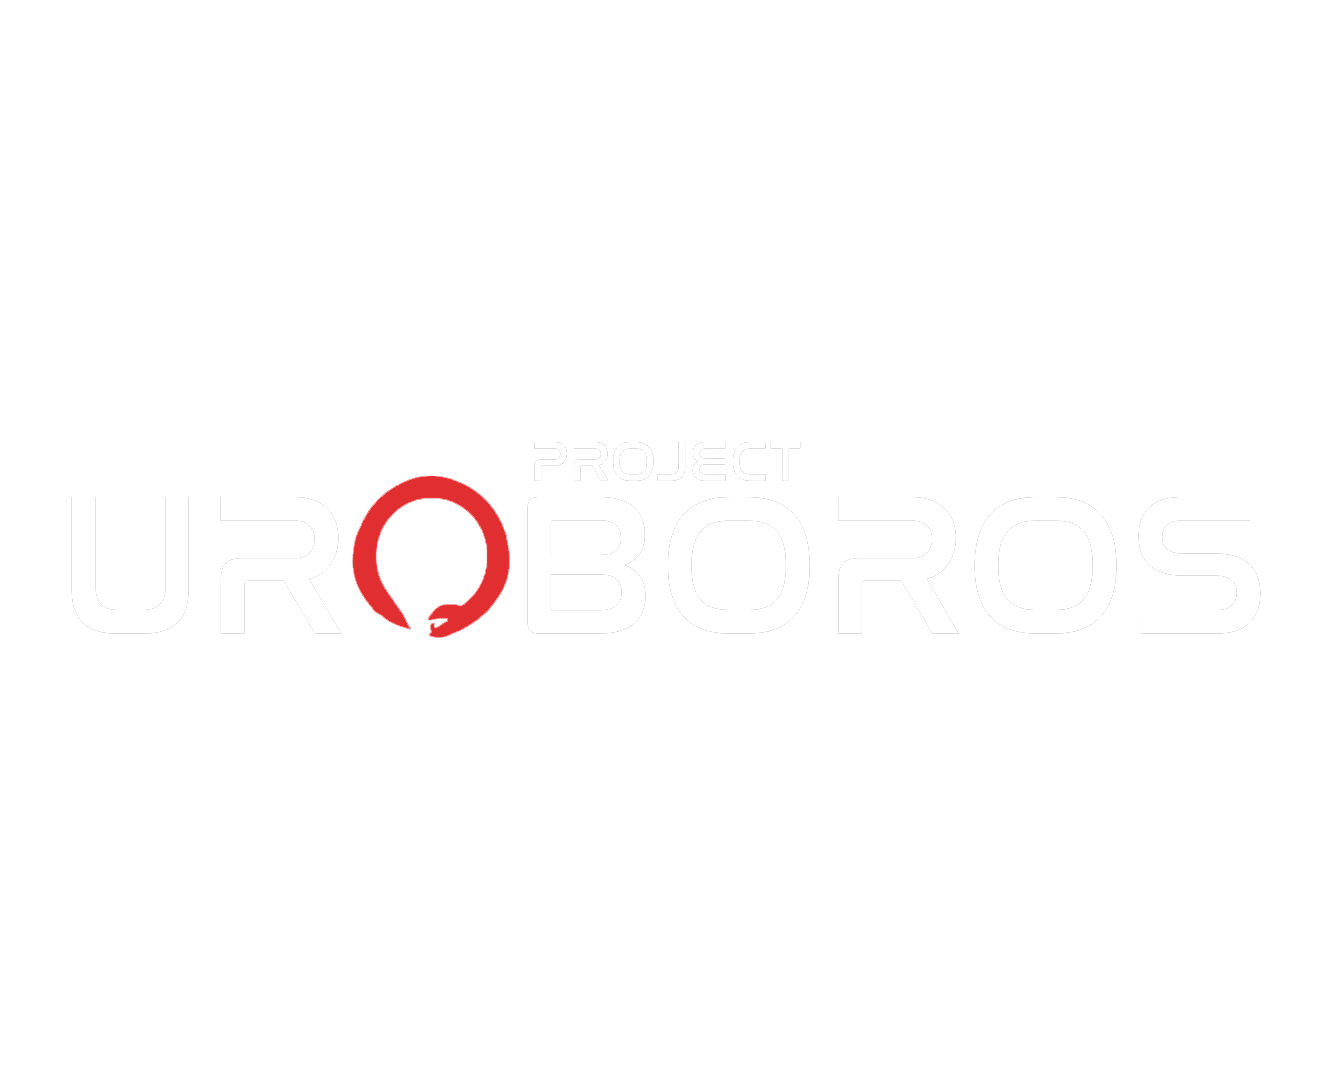 Uroboros Project